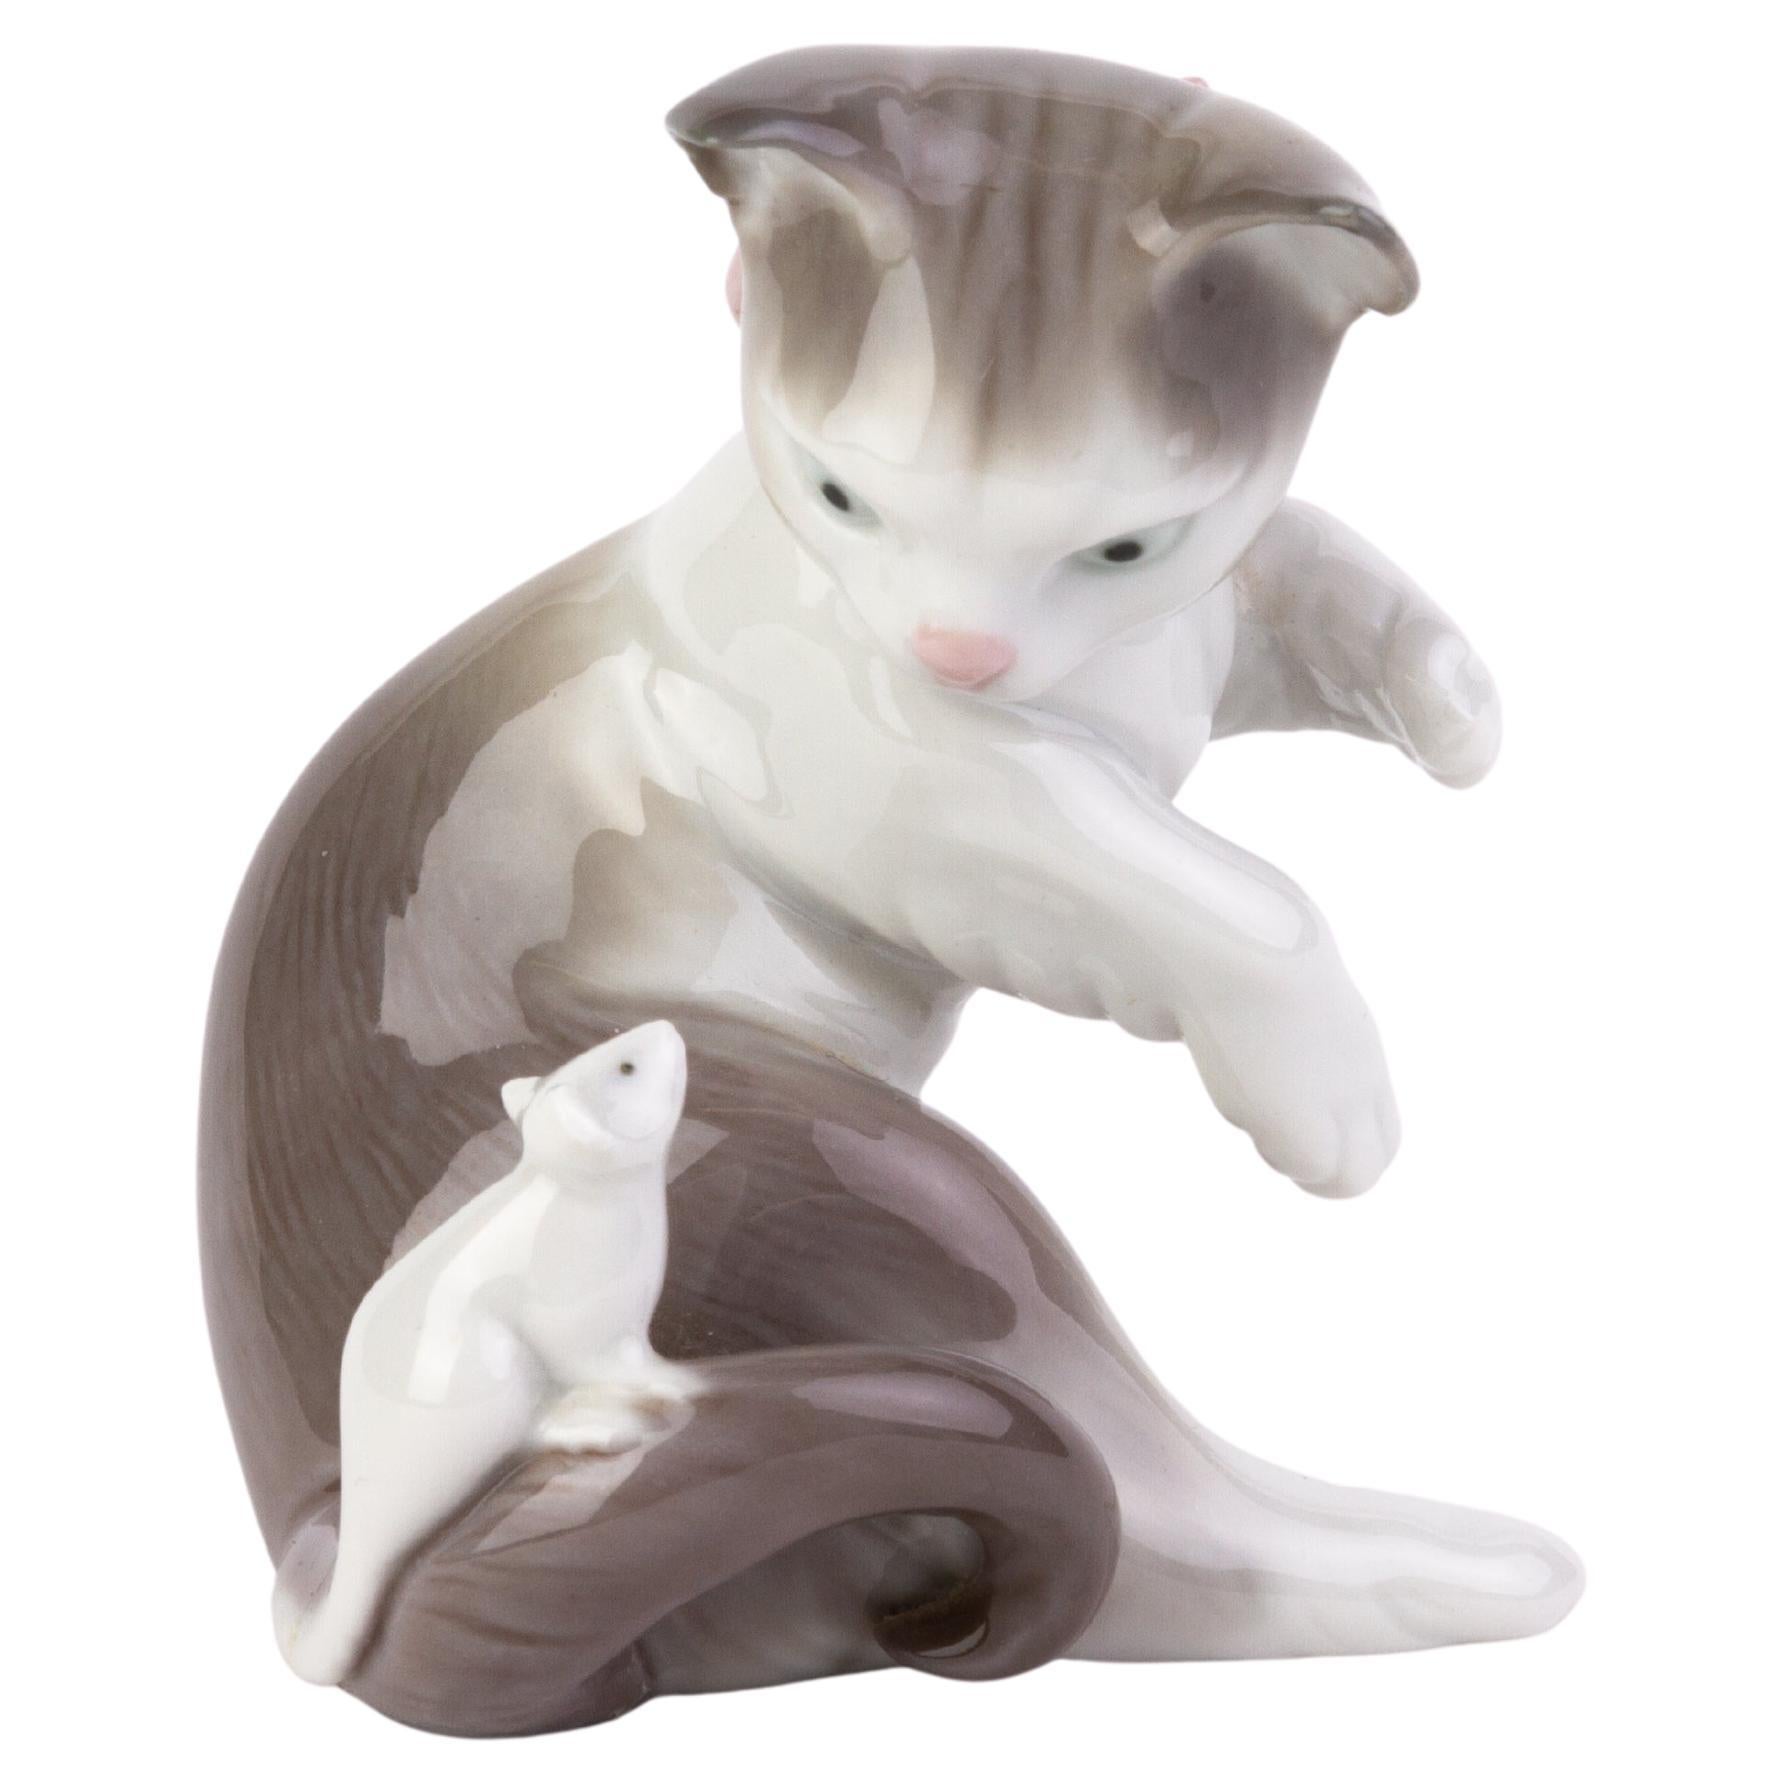 Lladro Fine Porcelain Sculpture Figure "Cat and Mouse" 5236 For Sale